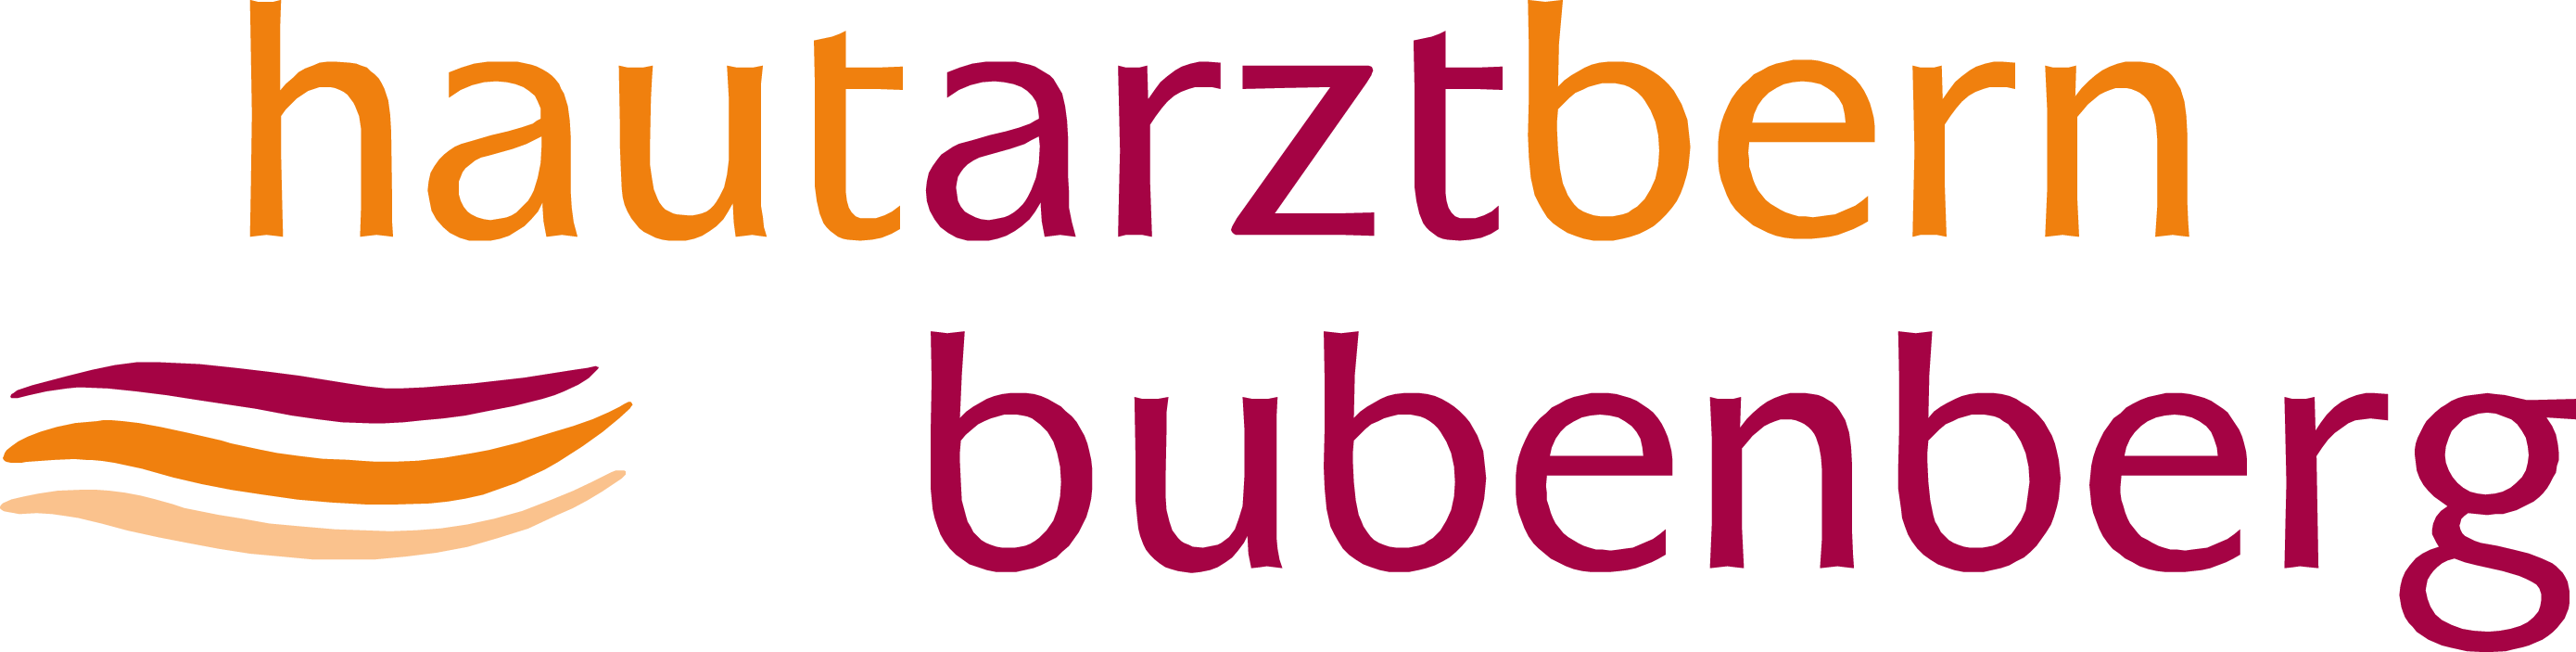 Logo_hautarzt_bern_bubenberg.png